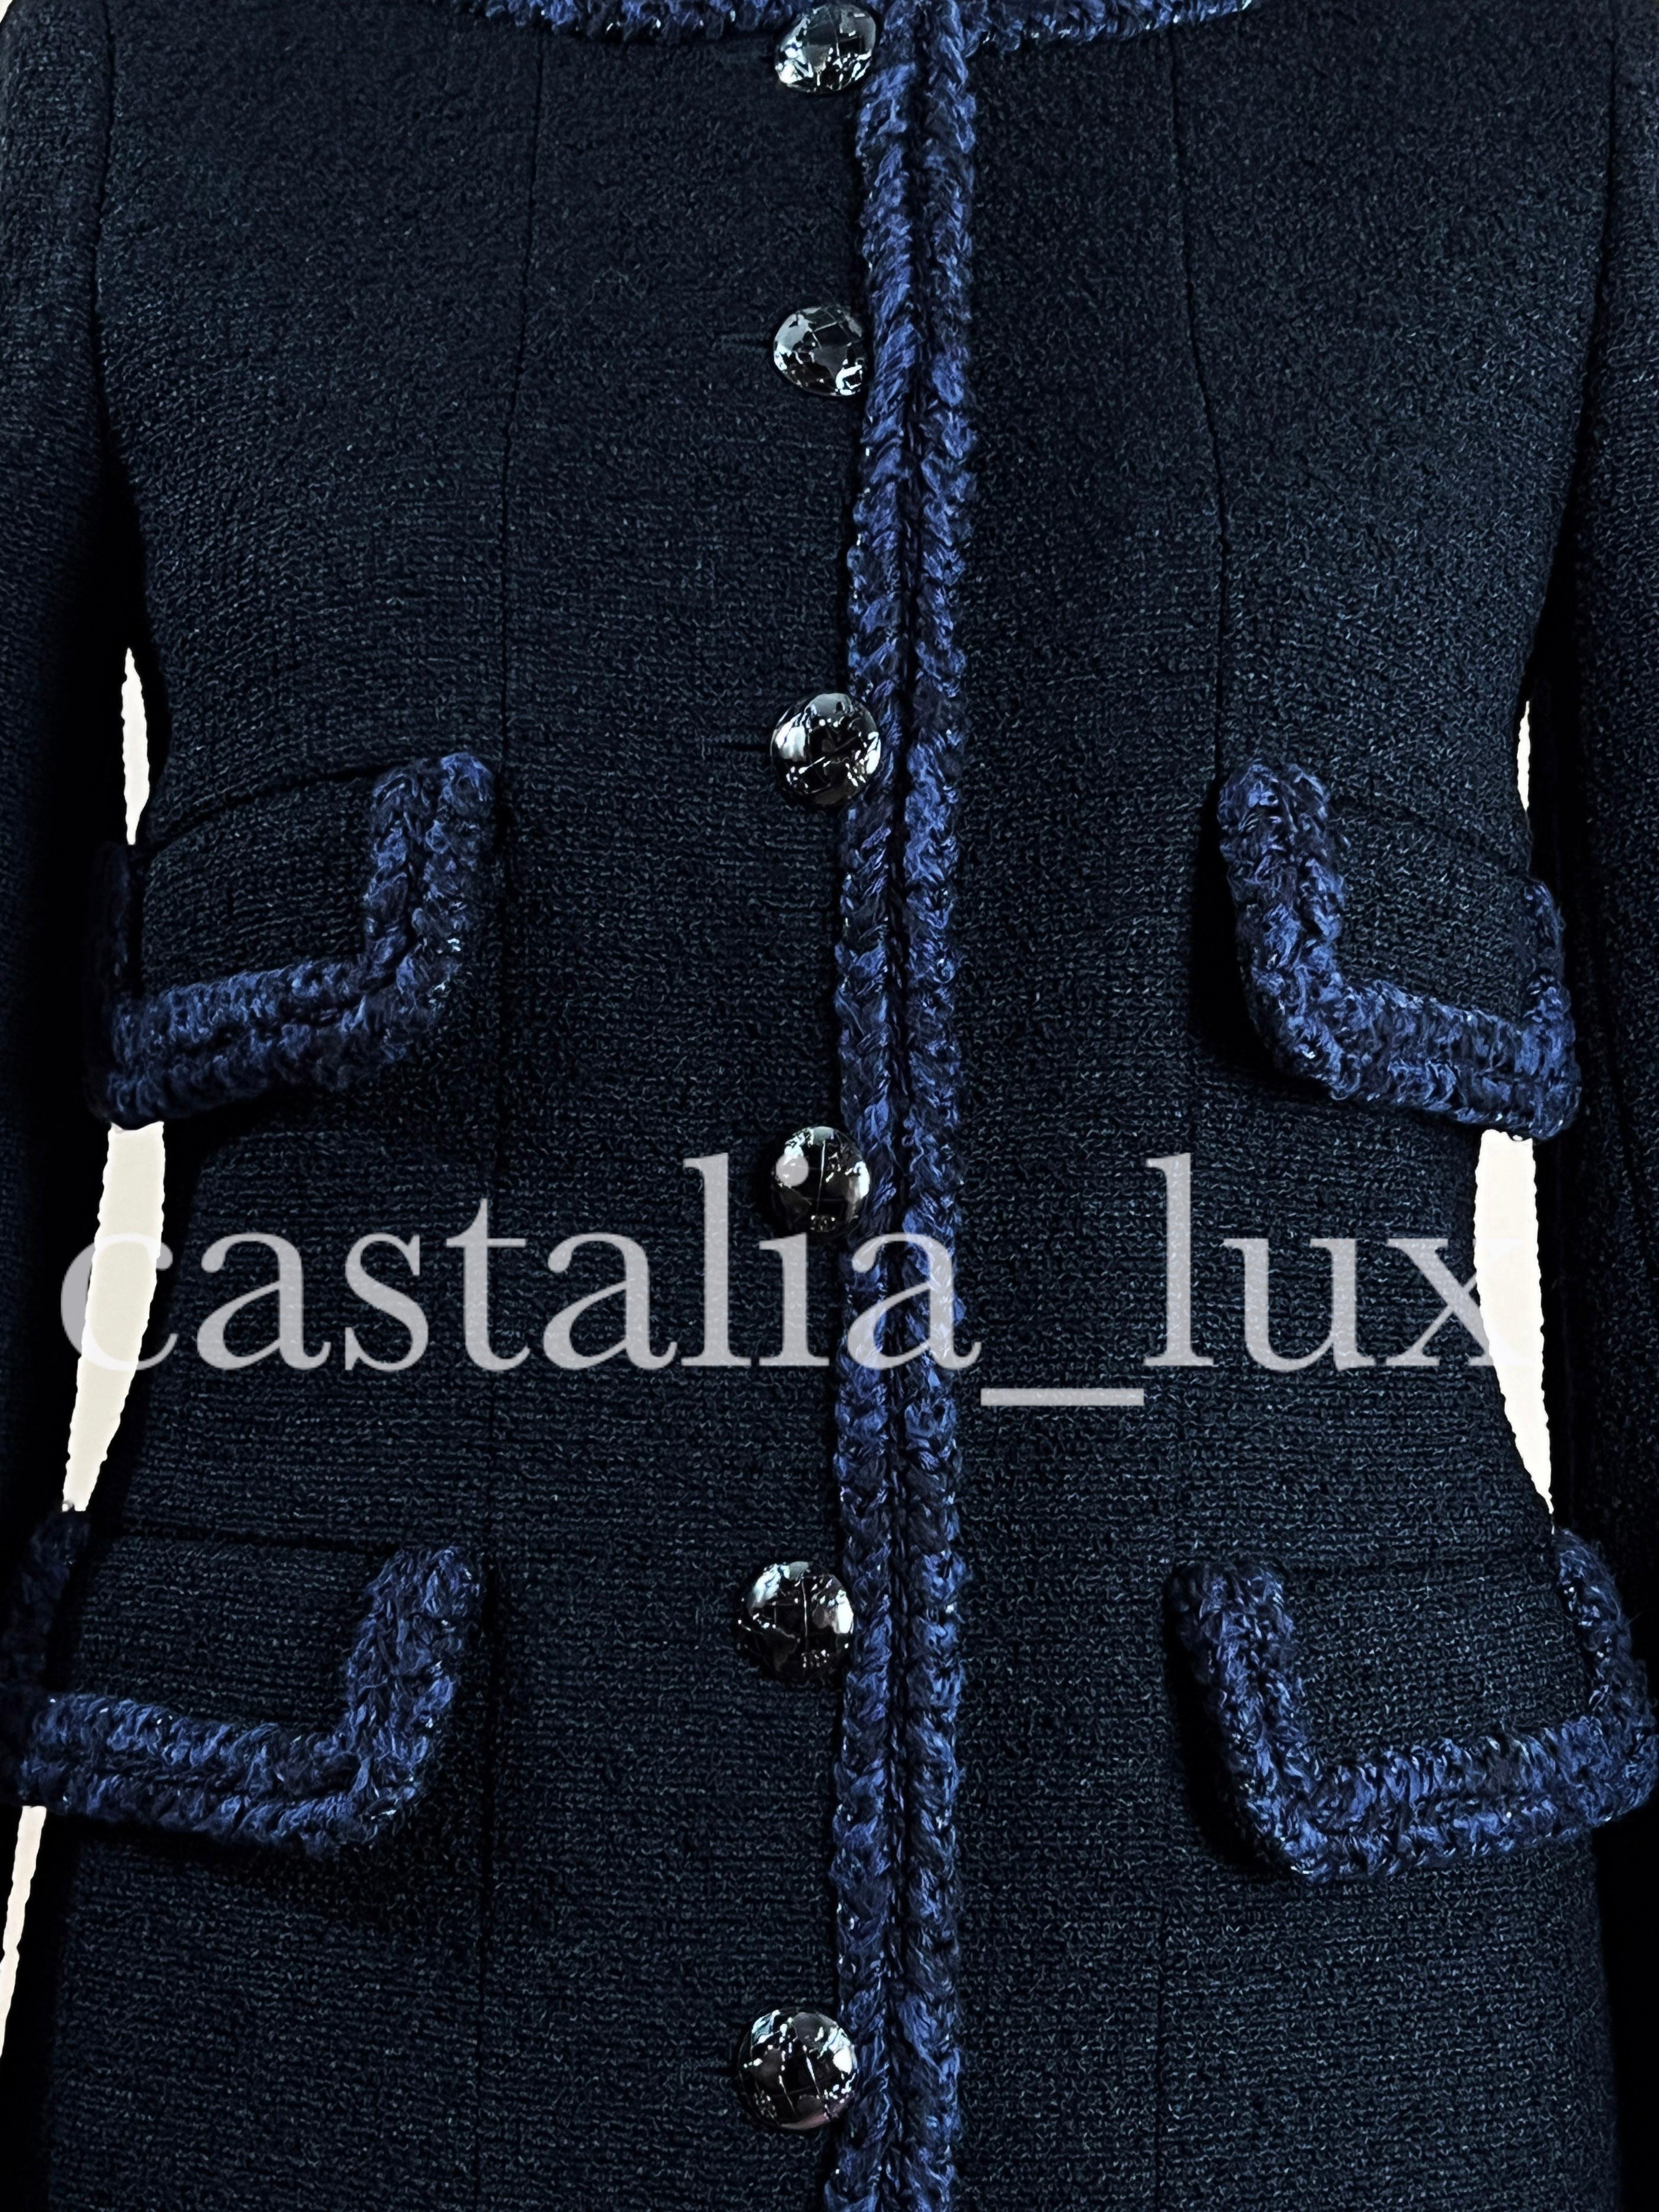 Chanel Iconic Keira Knightley Style Black Tweed Jacket 6